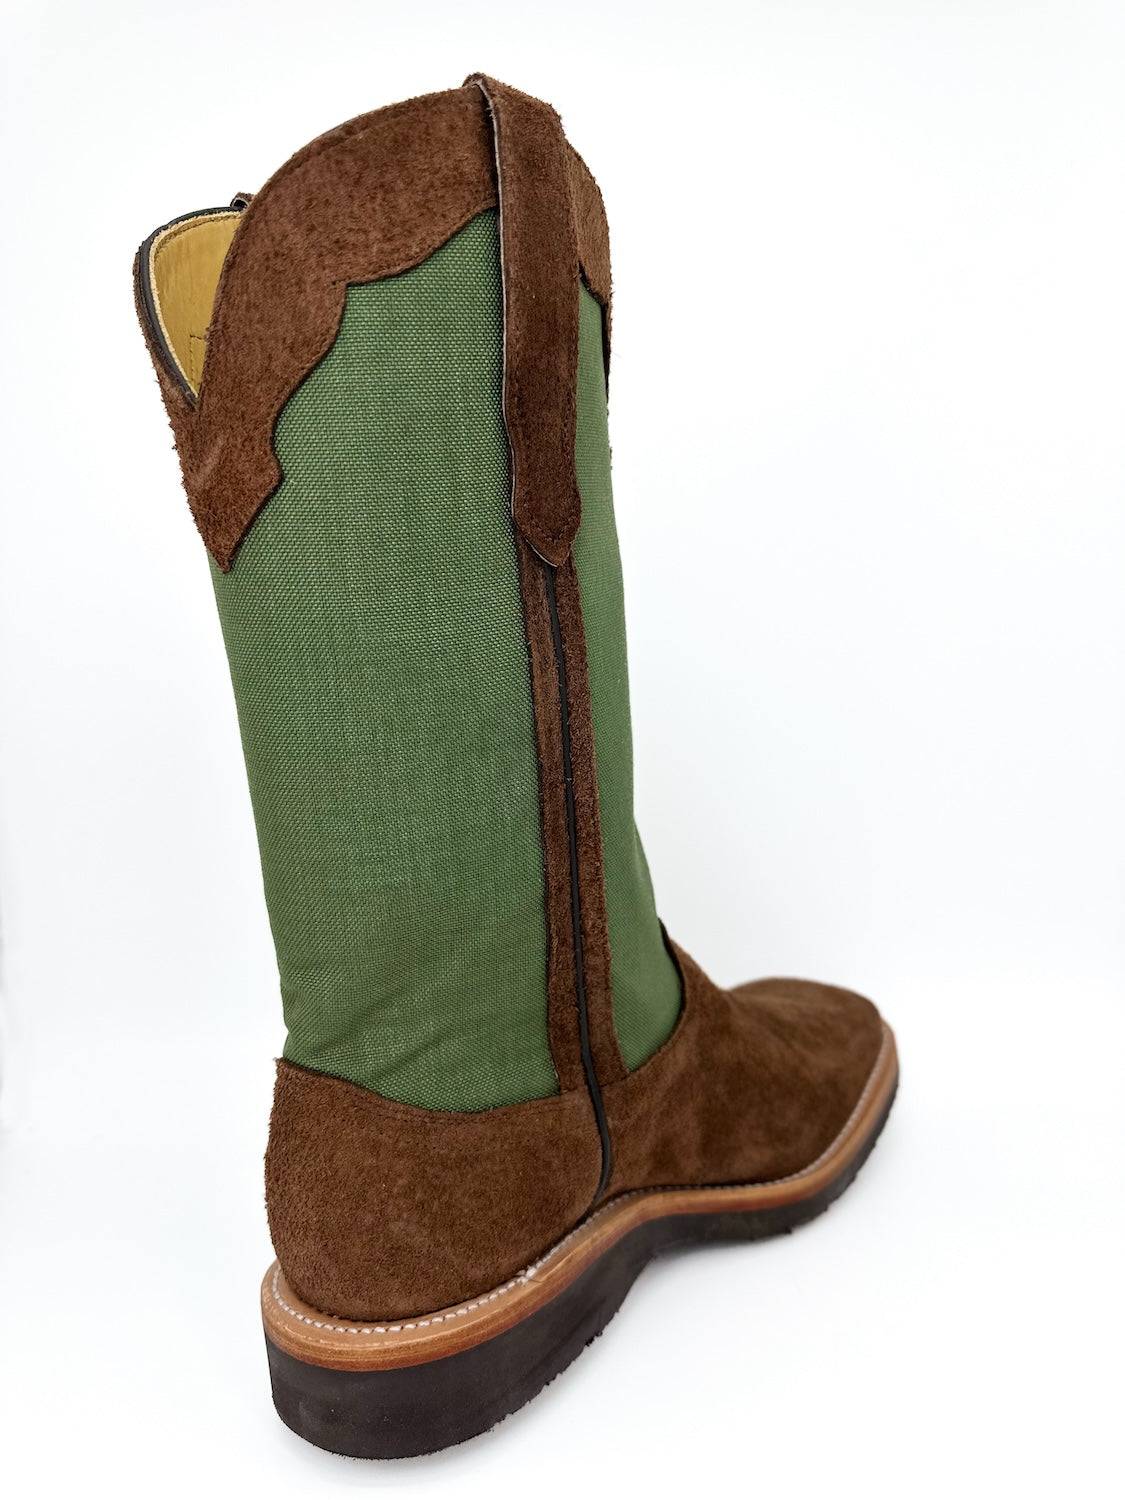 Fenoglio Chocolate Fuji Roughout with Viper Cloth Boots